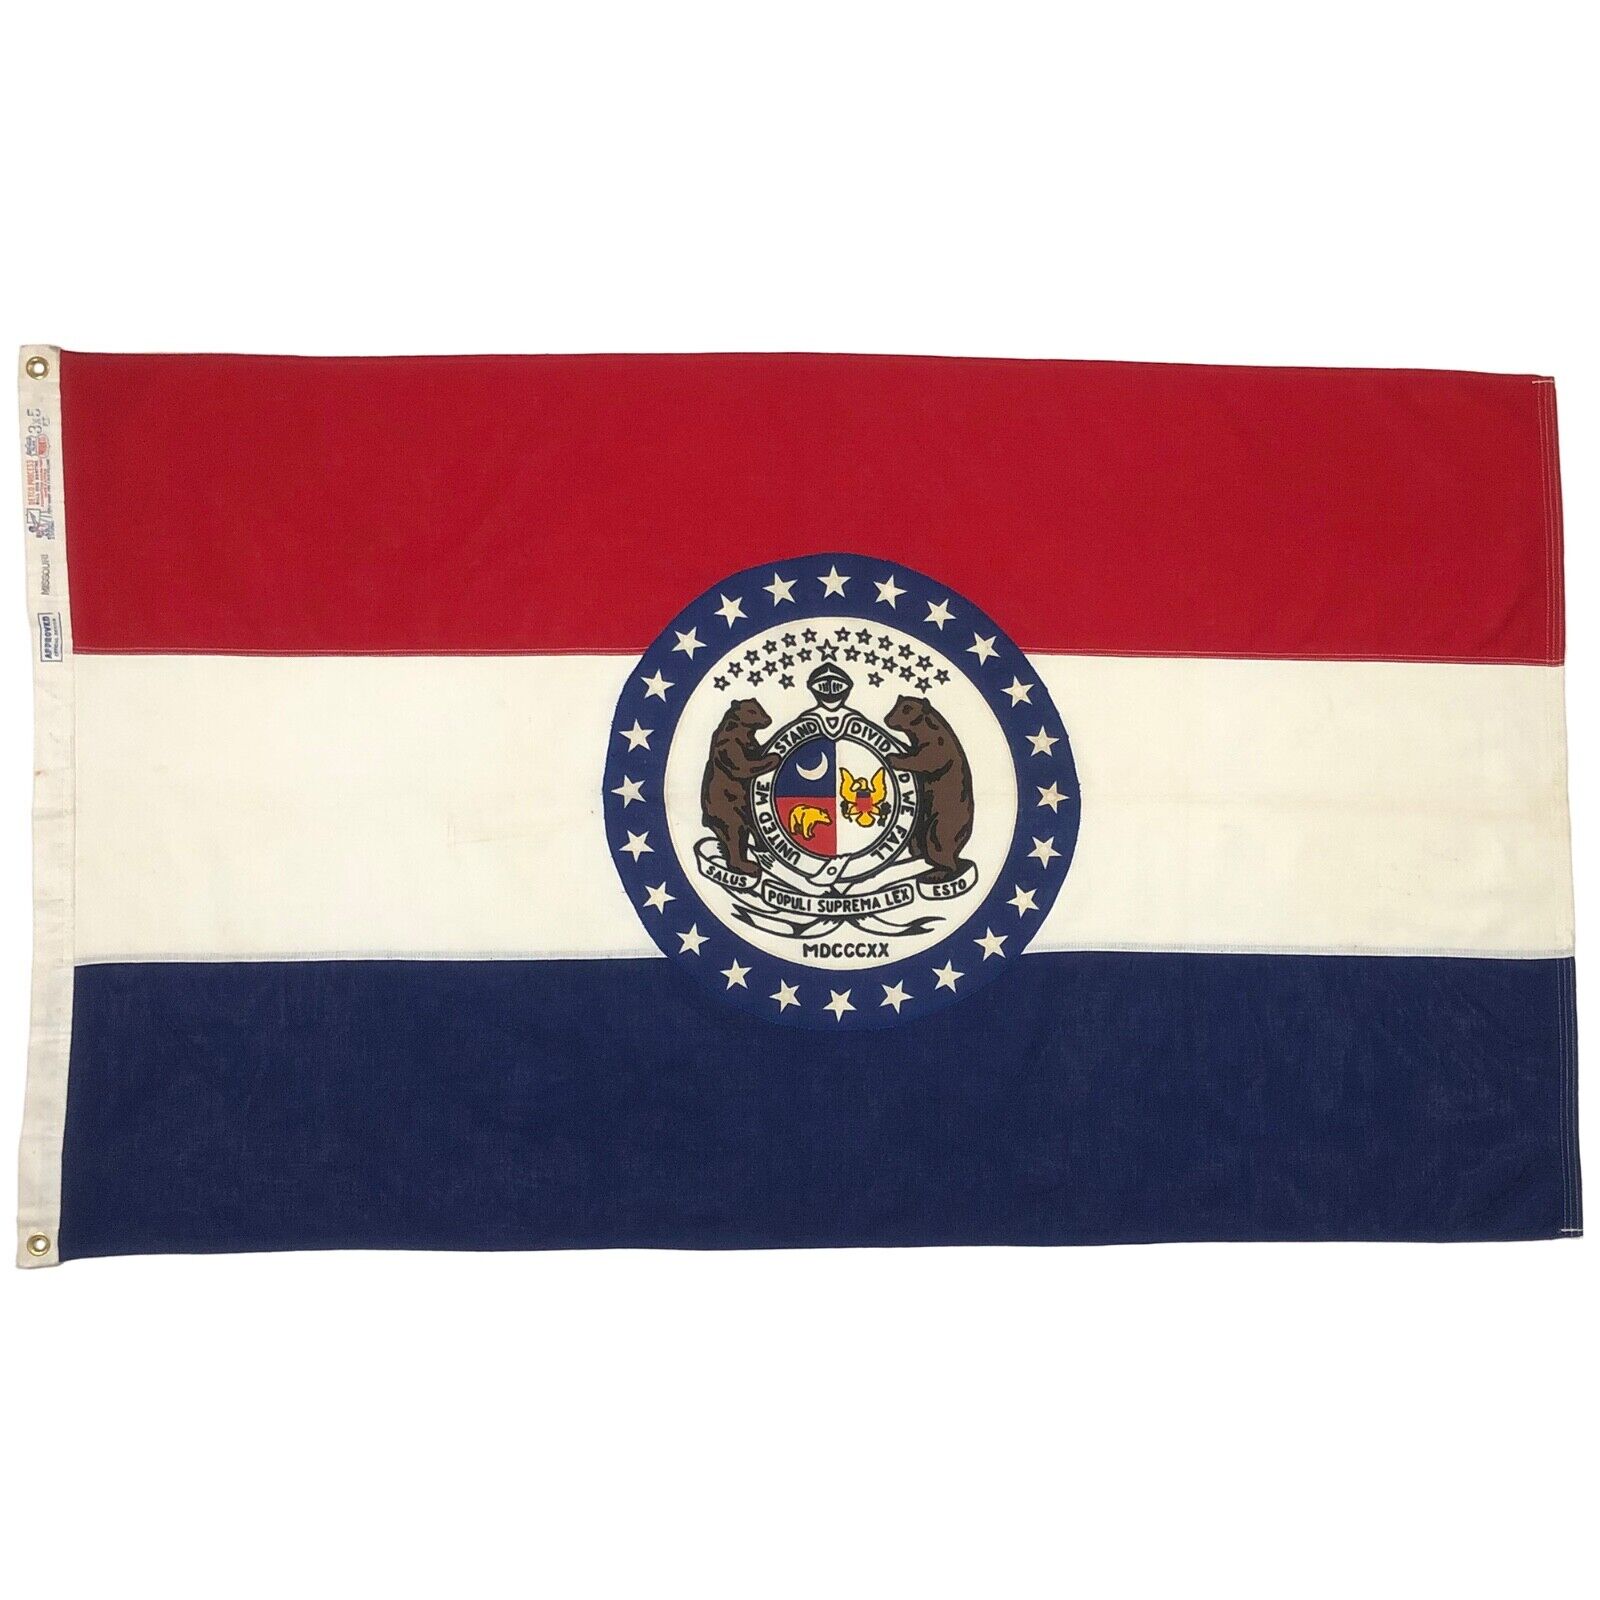 Vintage Sewn Cotton Missouri American State Bear Flag USA Old Cloth Textile Art